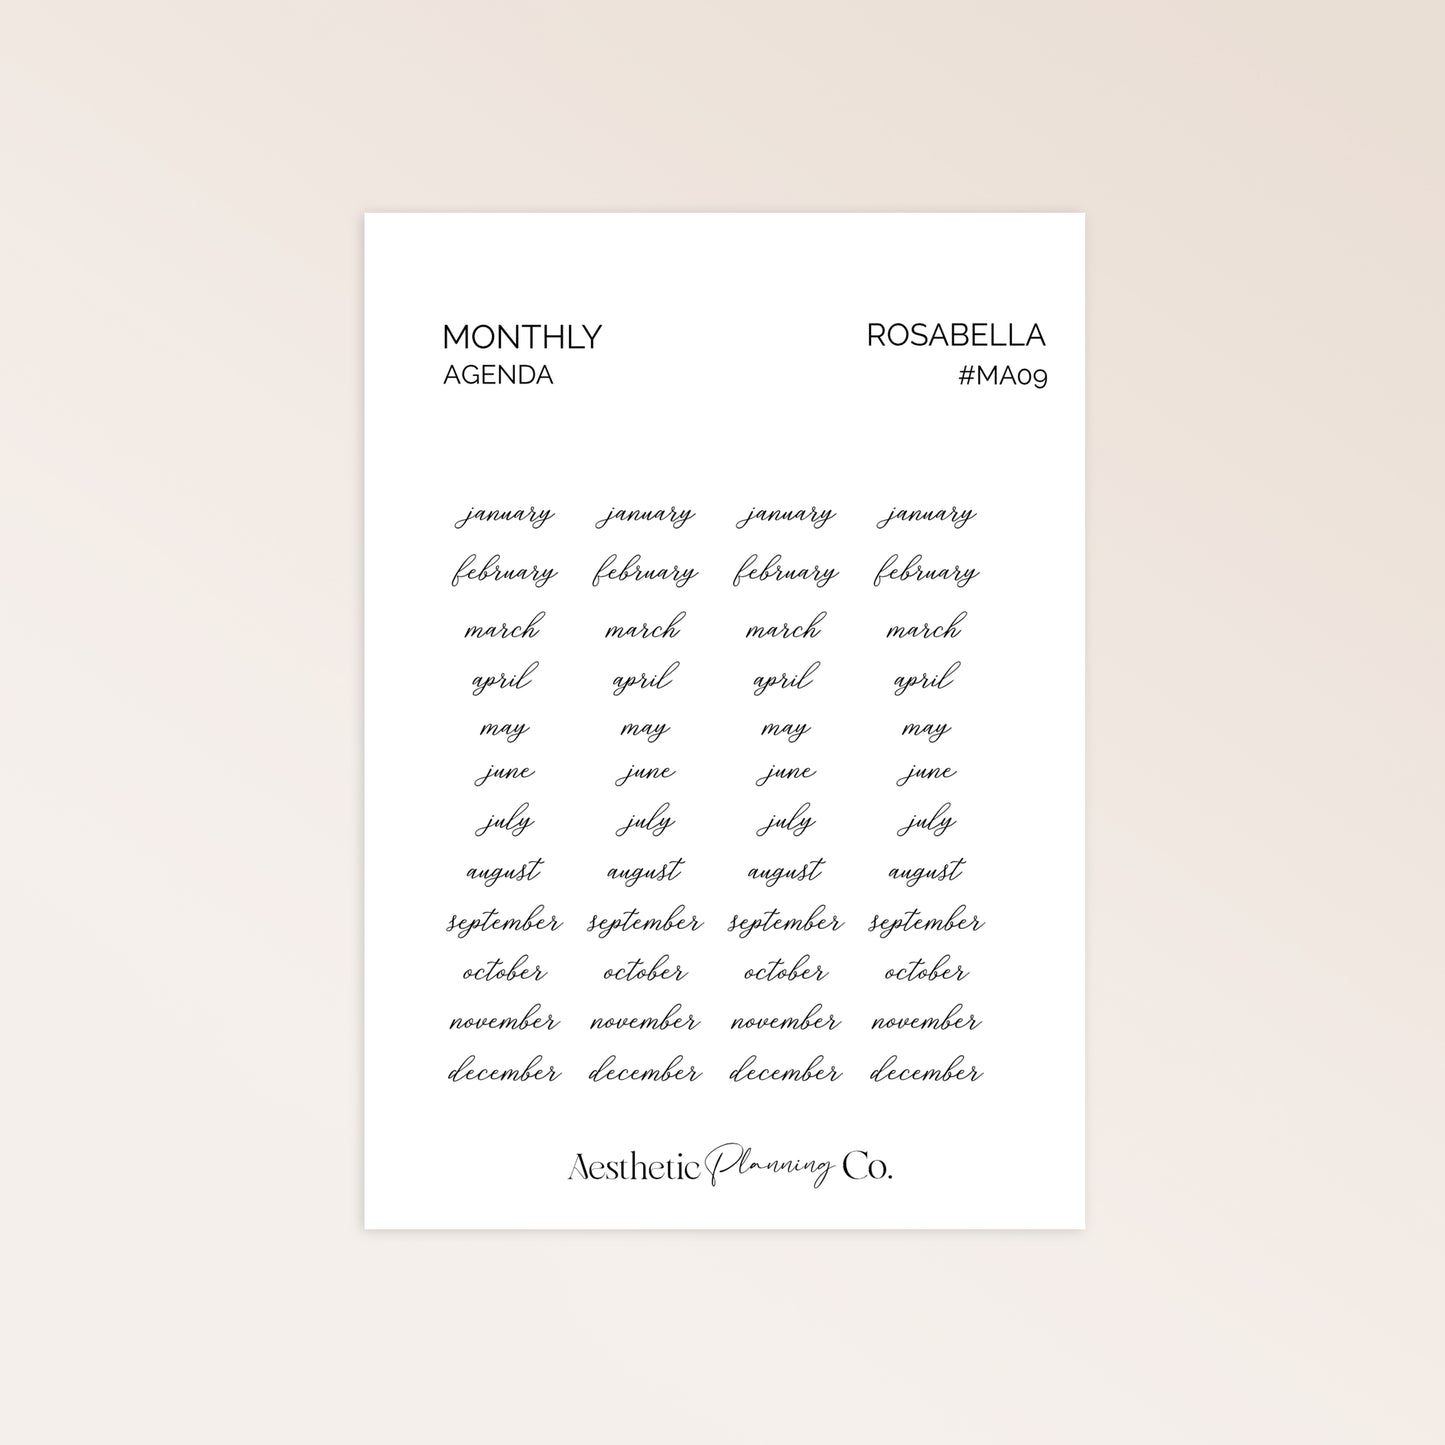 MONTHLY AGENDA | ROSABELLA